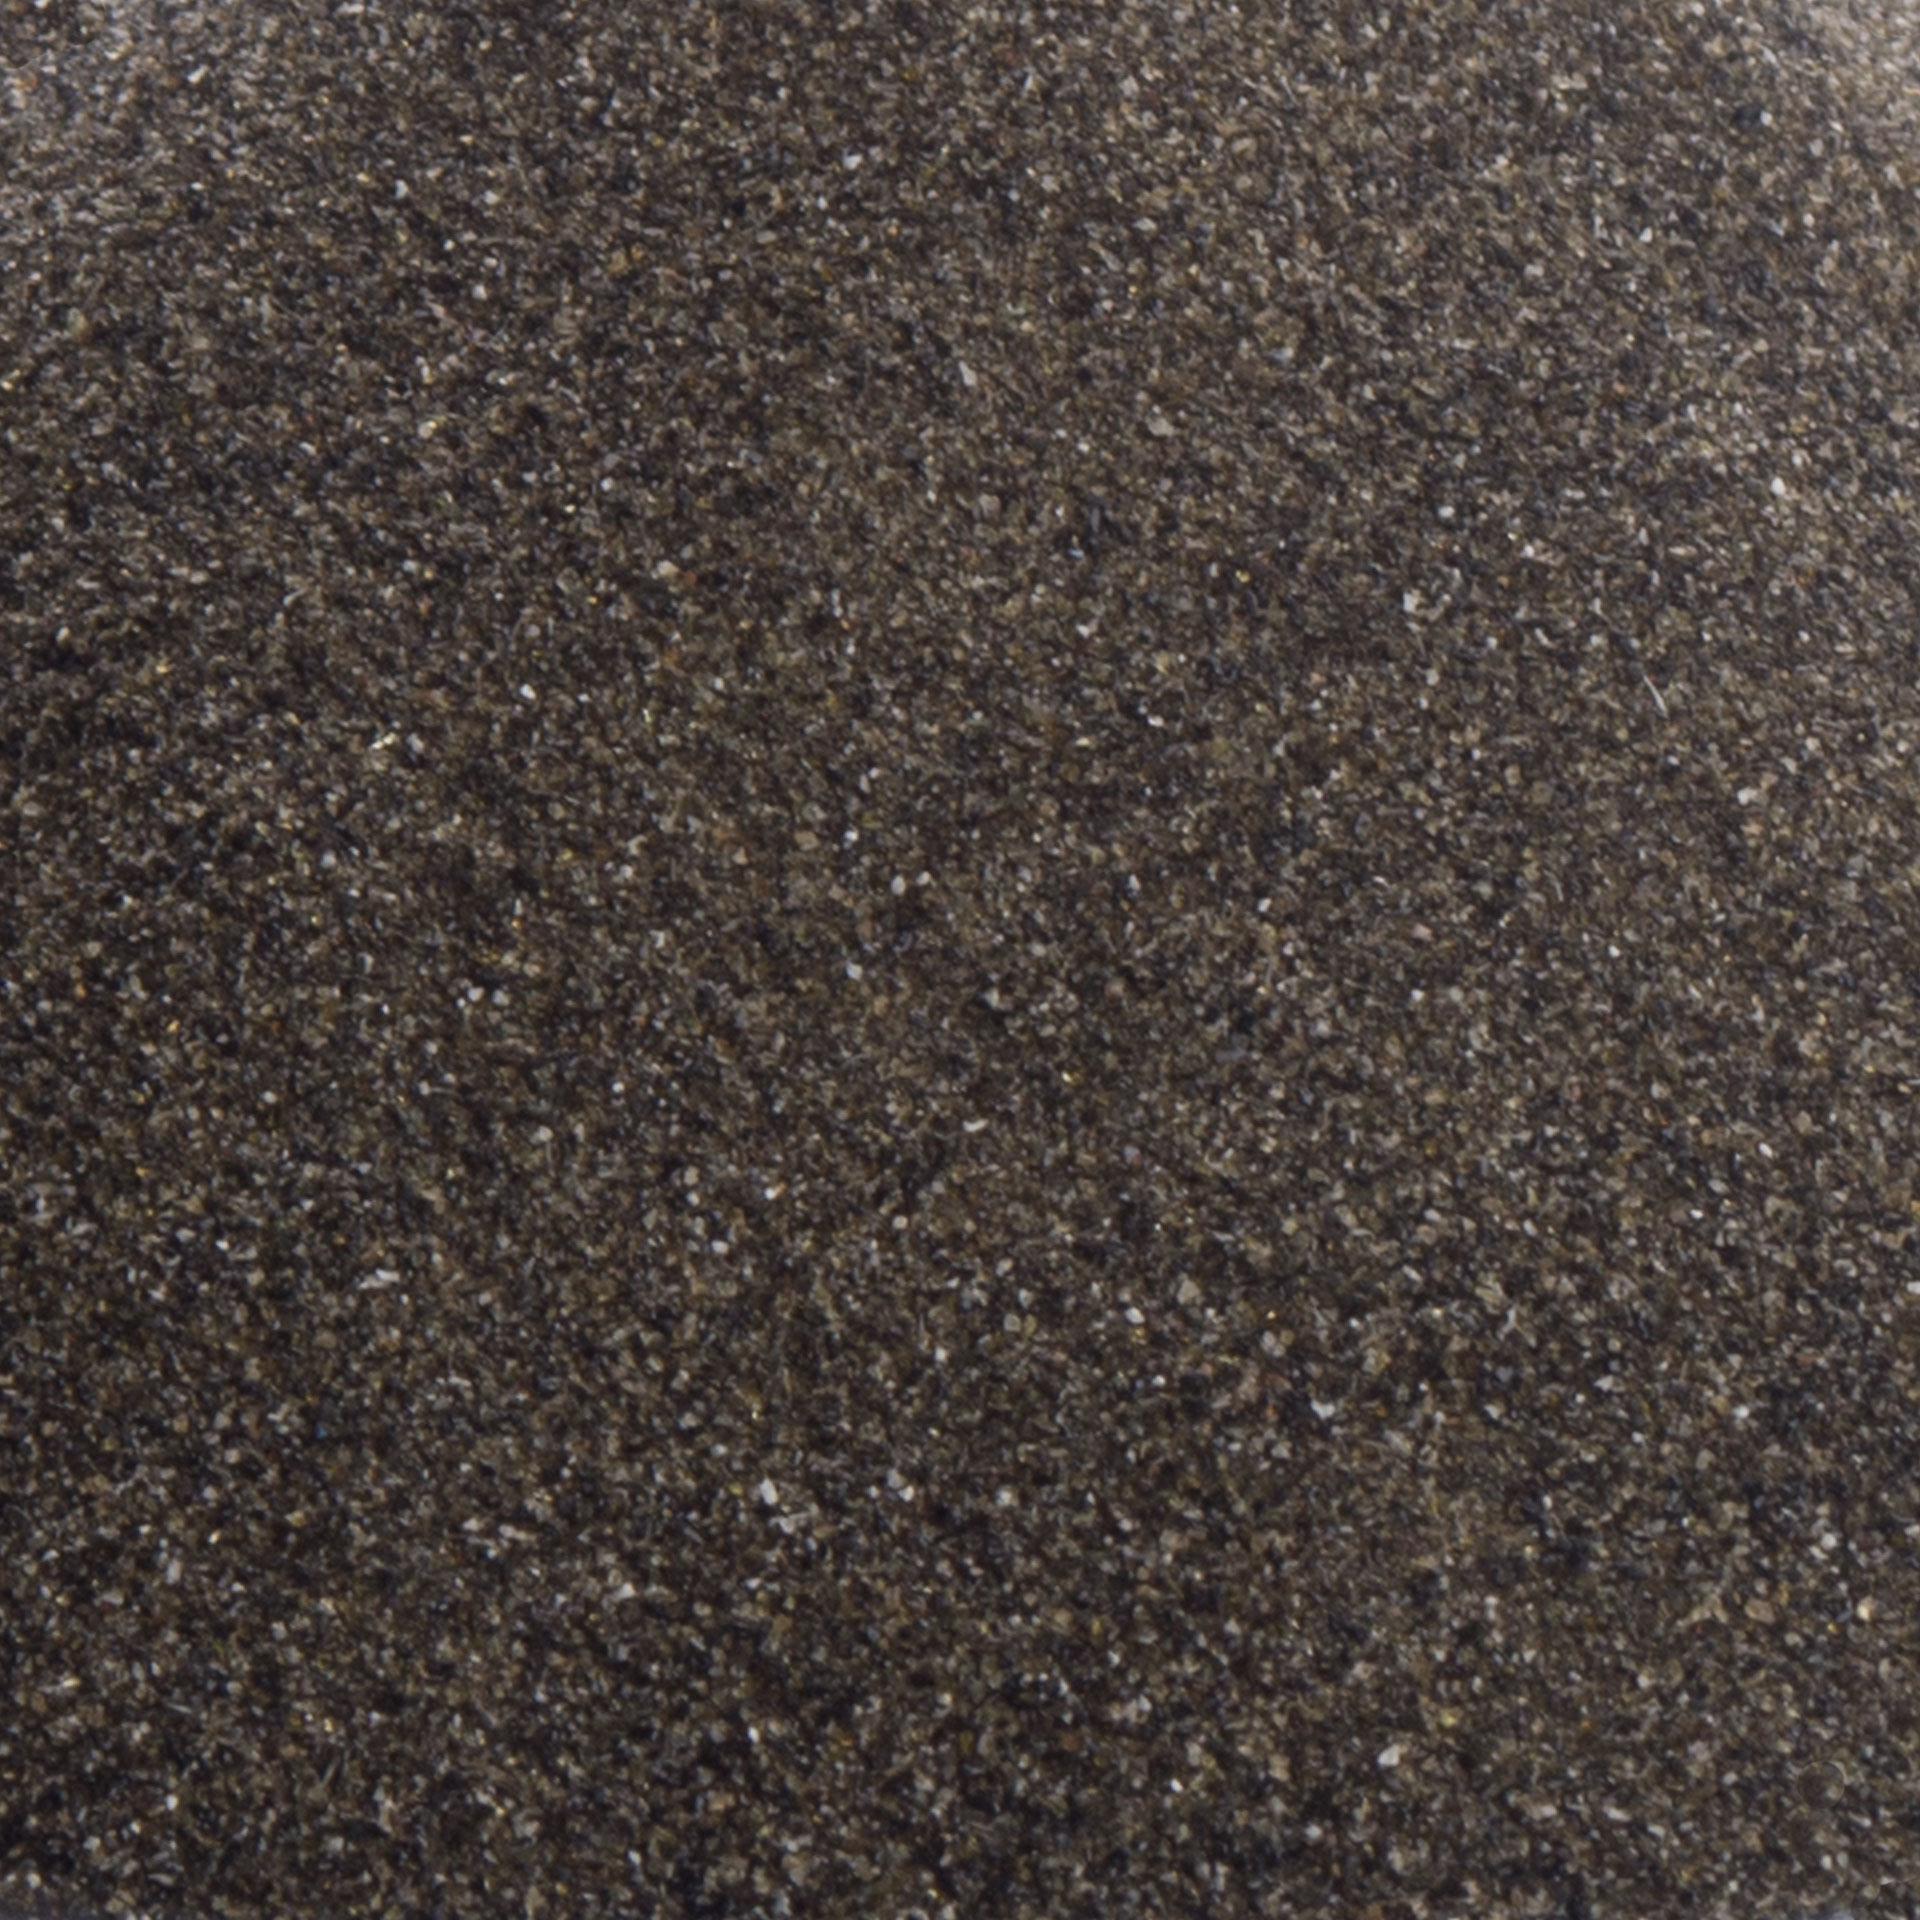 Kontrasil 12,5 kg Strahlmittel CU Strahlgut Sandstrahlen alle Körnungen 0,2-0,8 mm